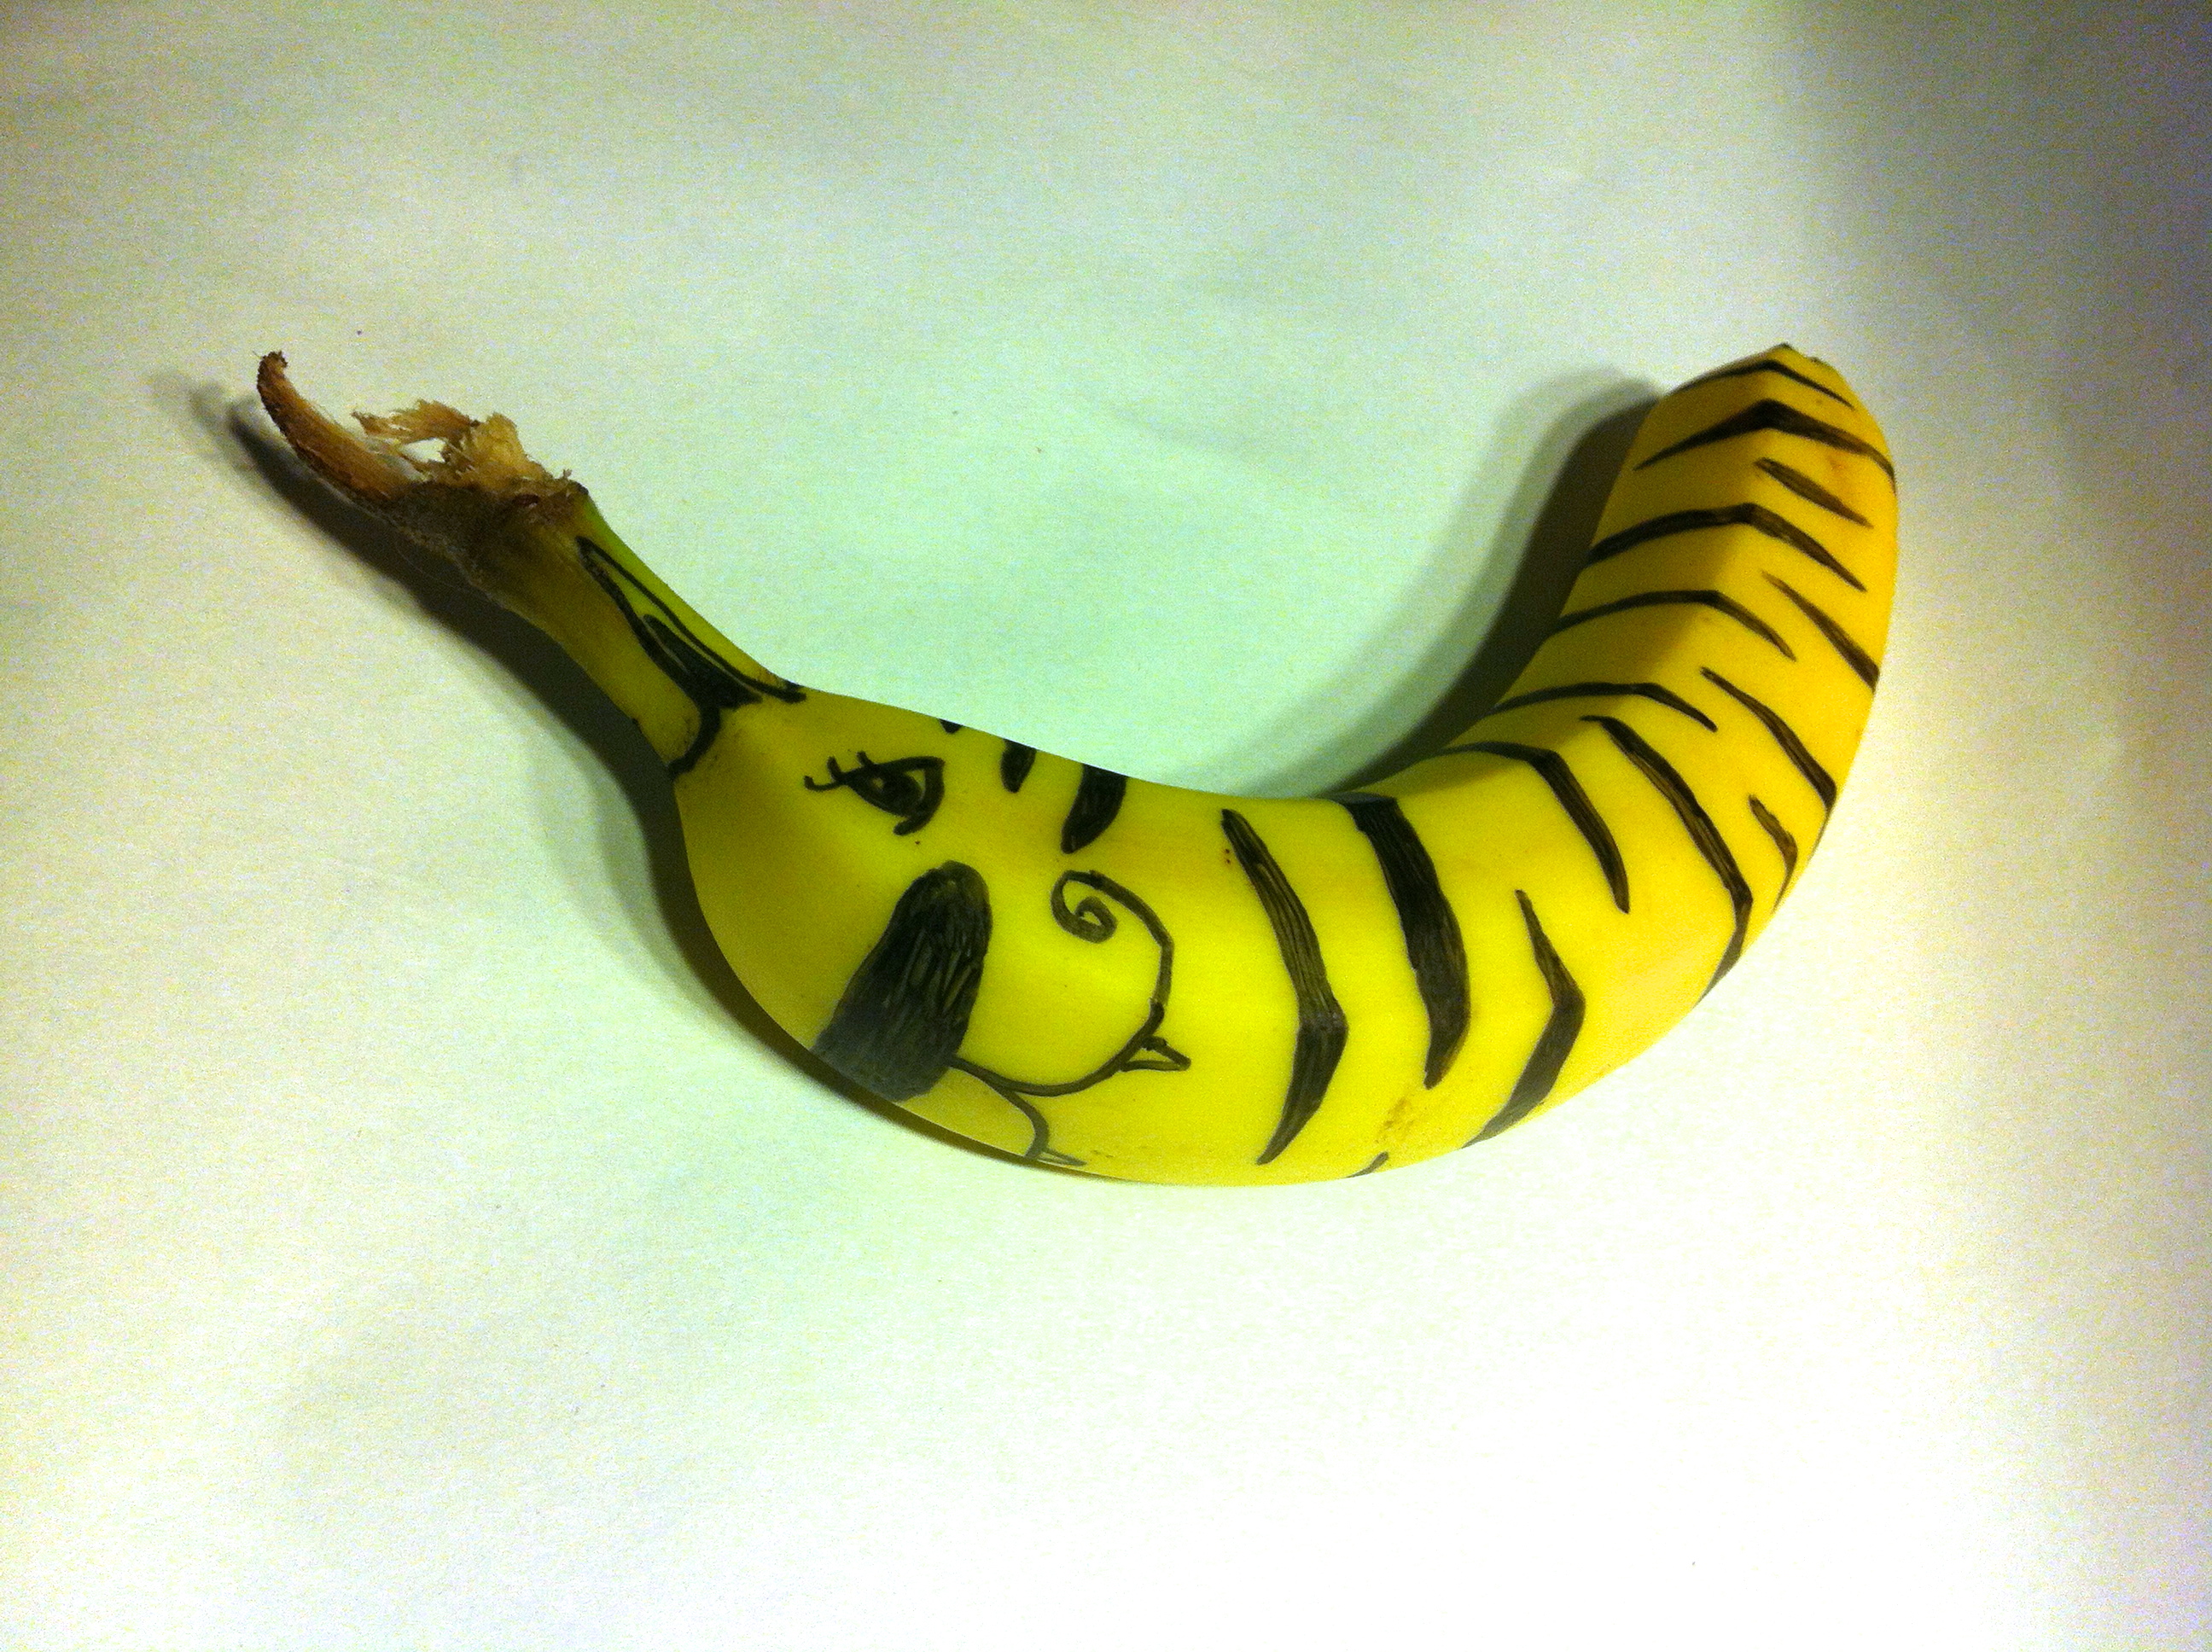 Painted banana, black stripes on a yellow banana looks like a cartoon tiger.